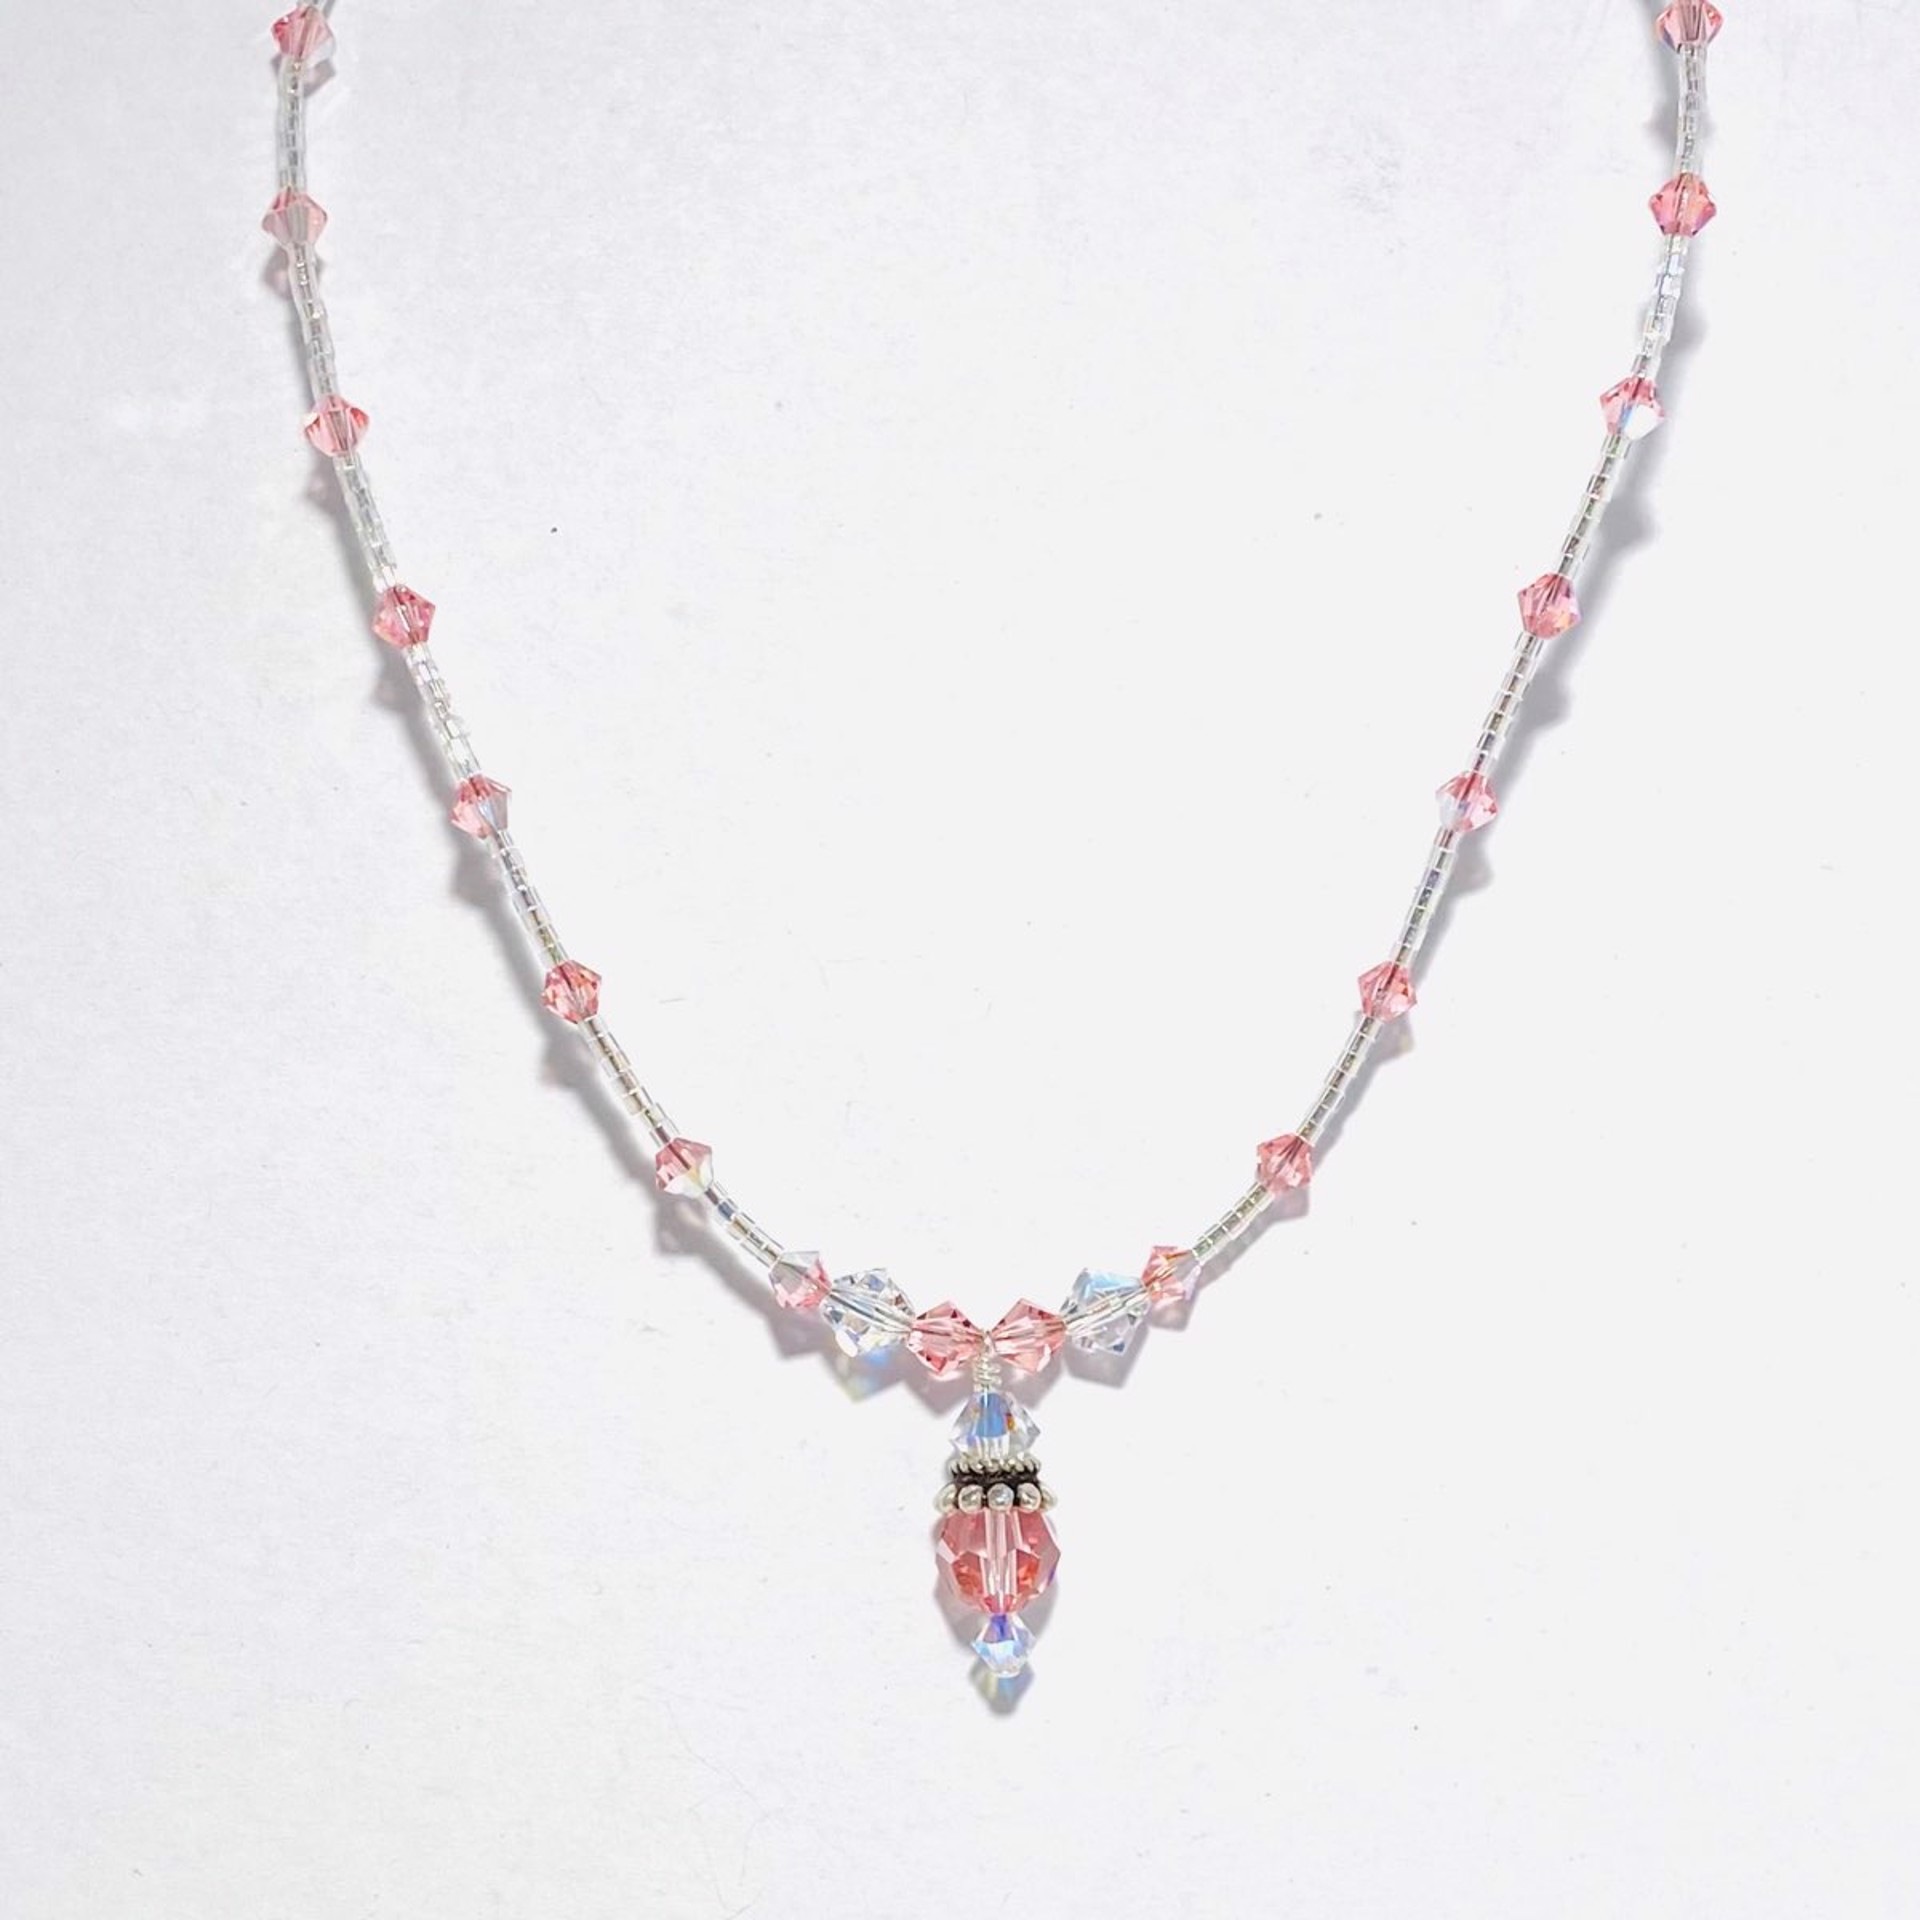 Birthstone Necklace~October Pink "Opal" Swarovski Crystals SHOSH22-55 by Shoshannah Weinisch